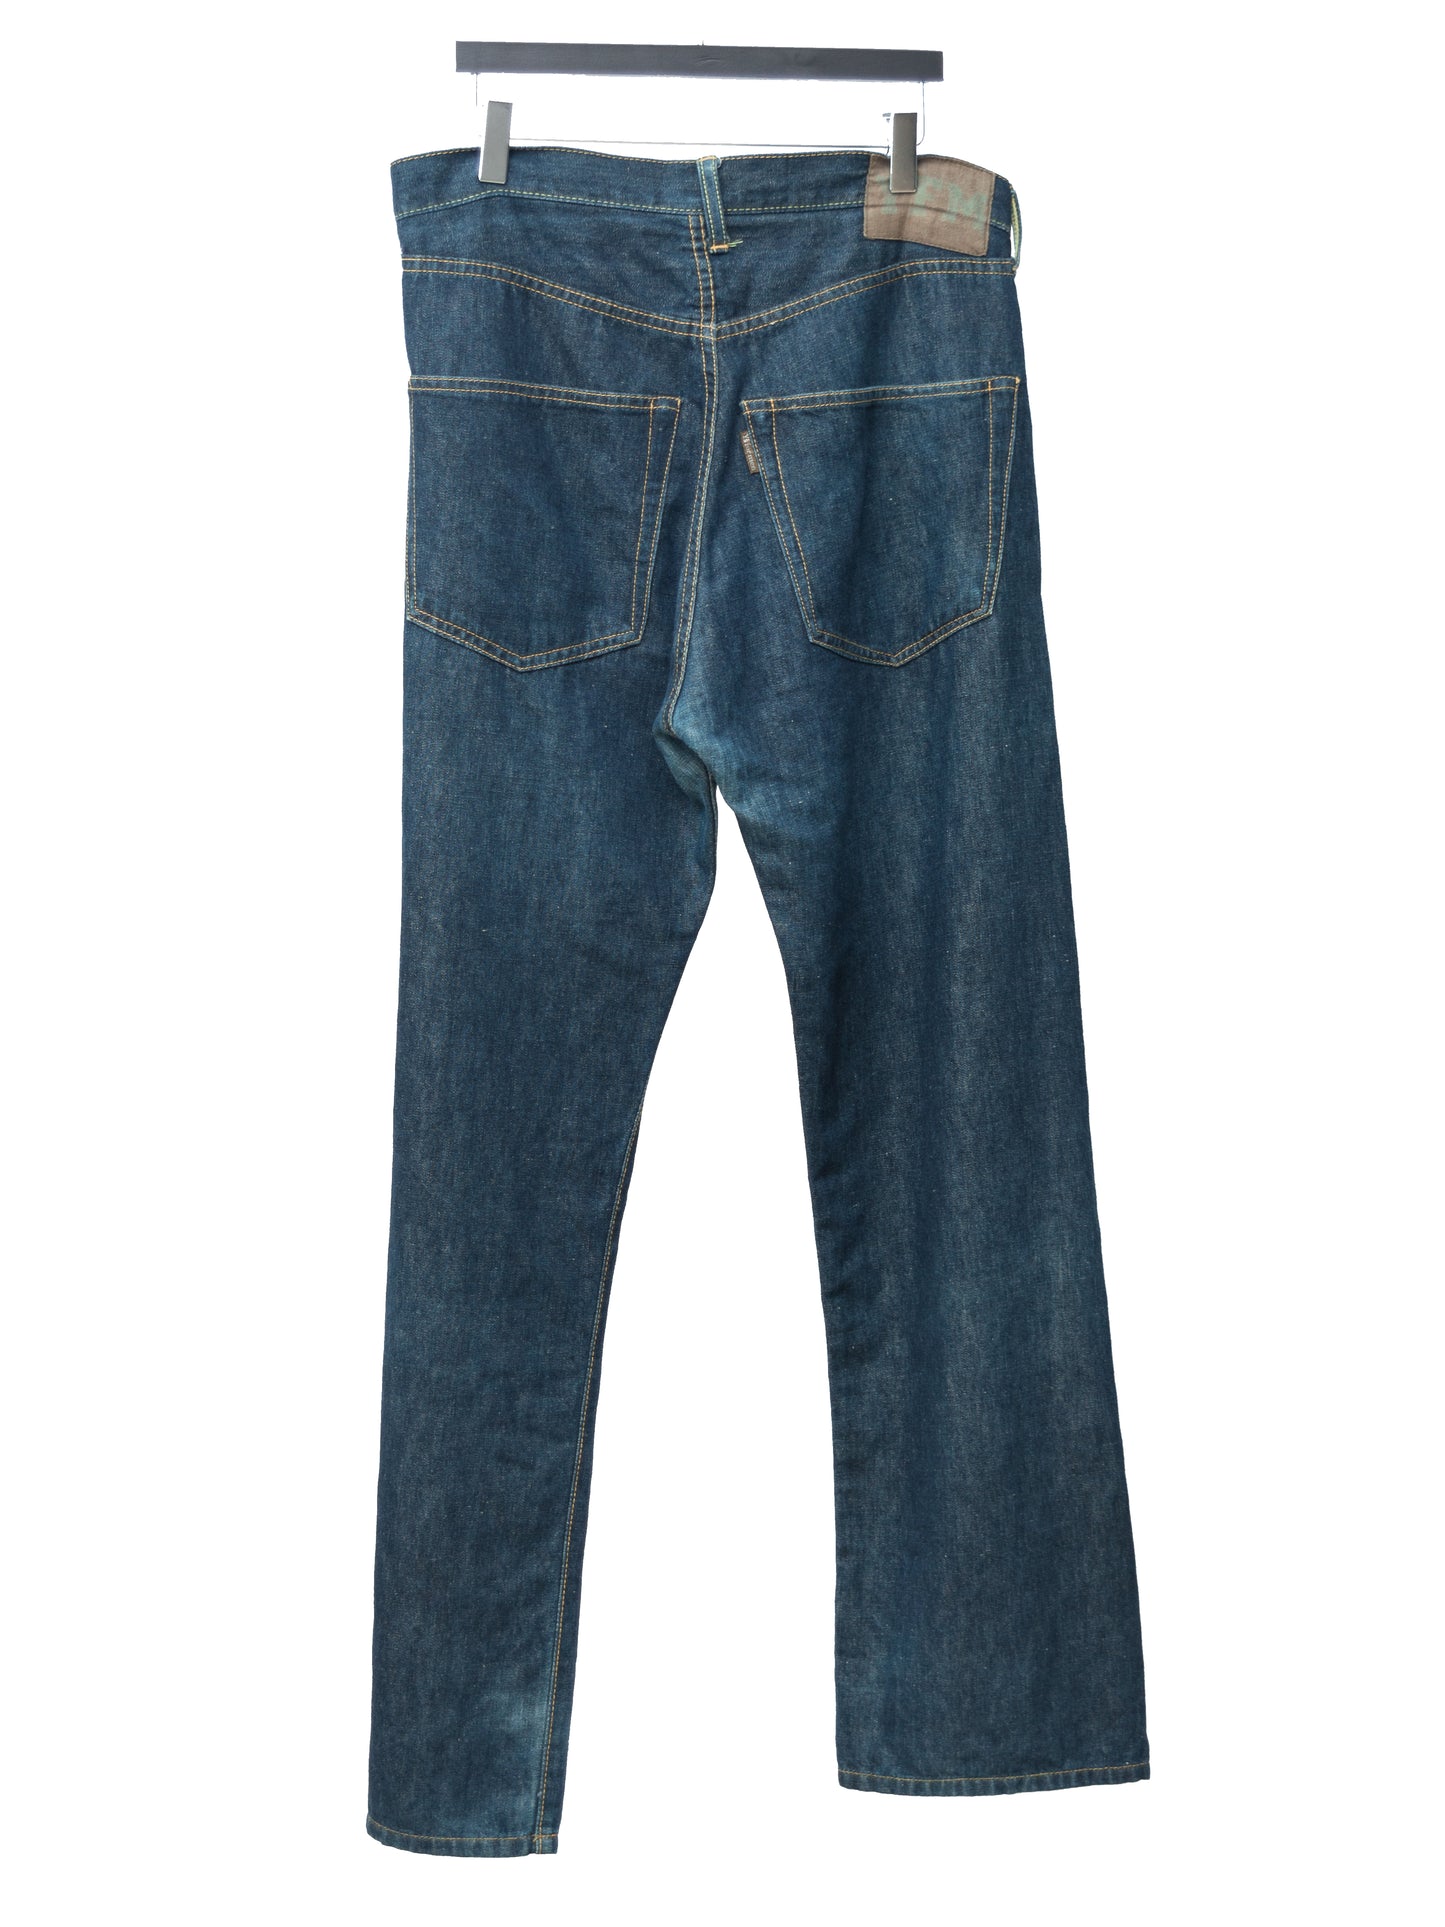 5p jeans indigo ∙ cotton linen denim ∙ small